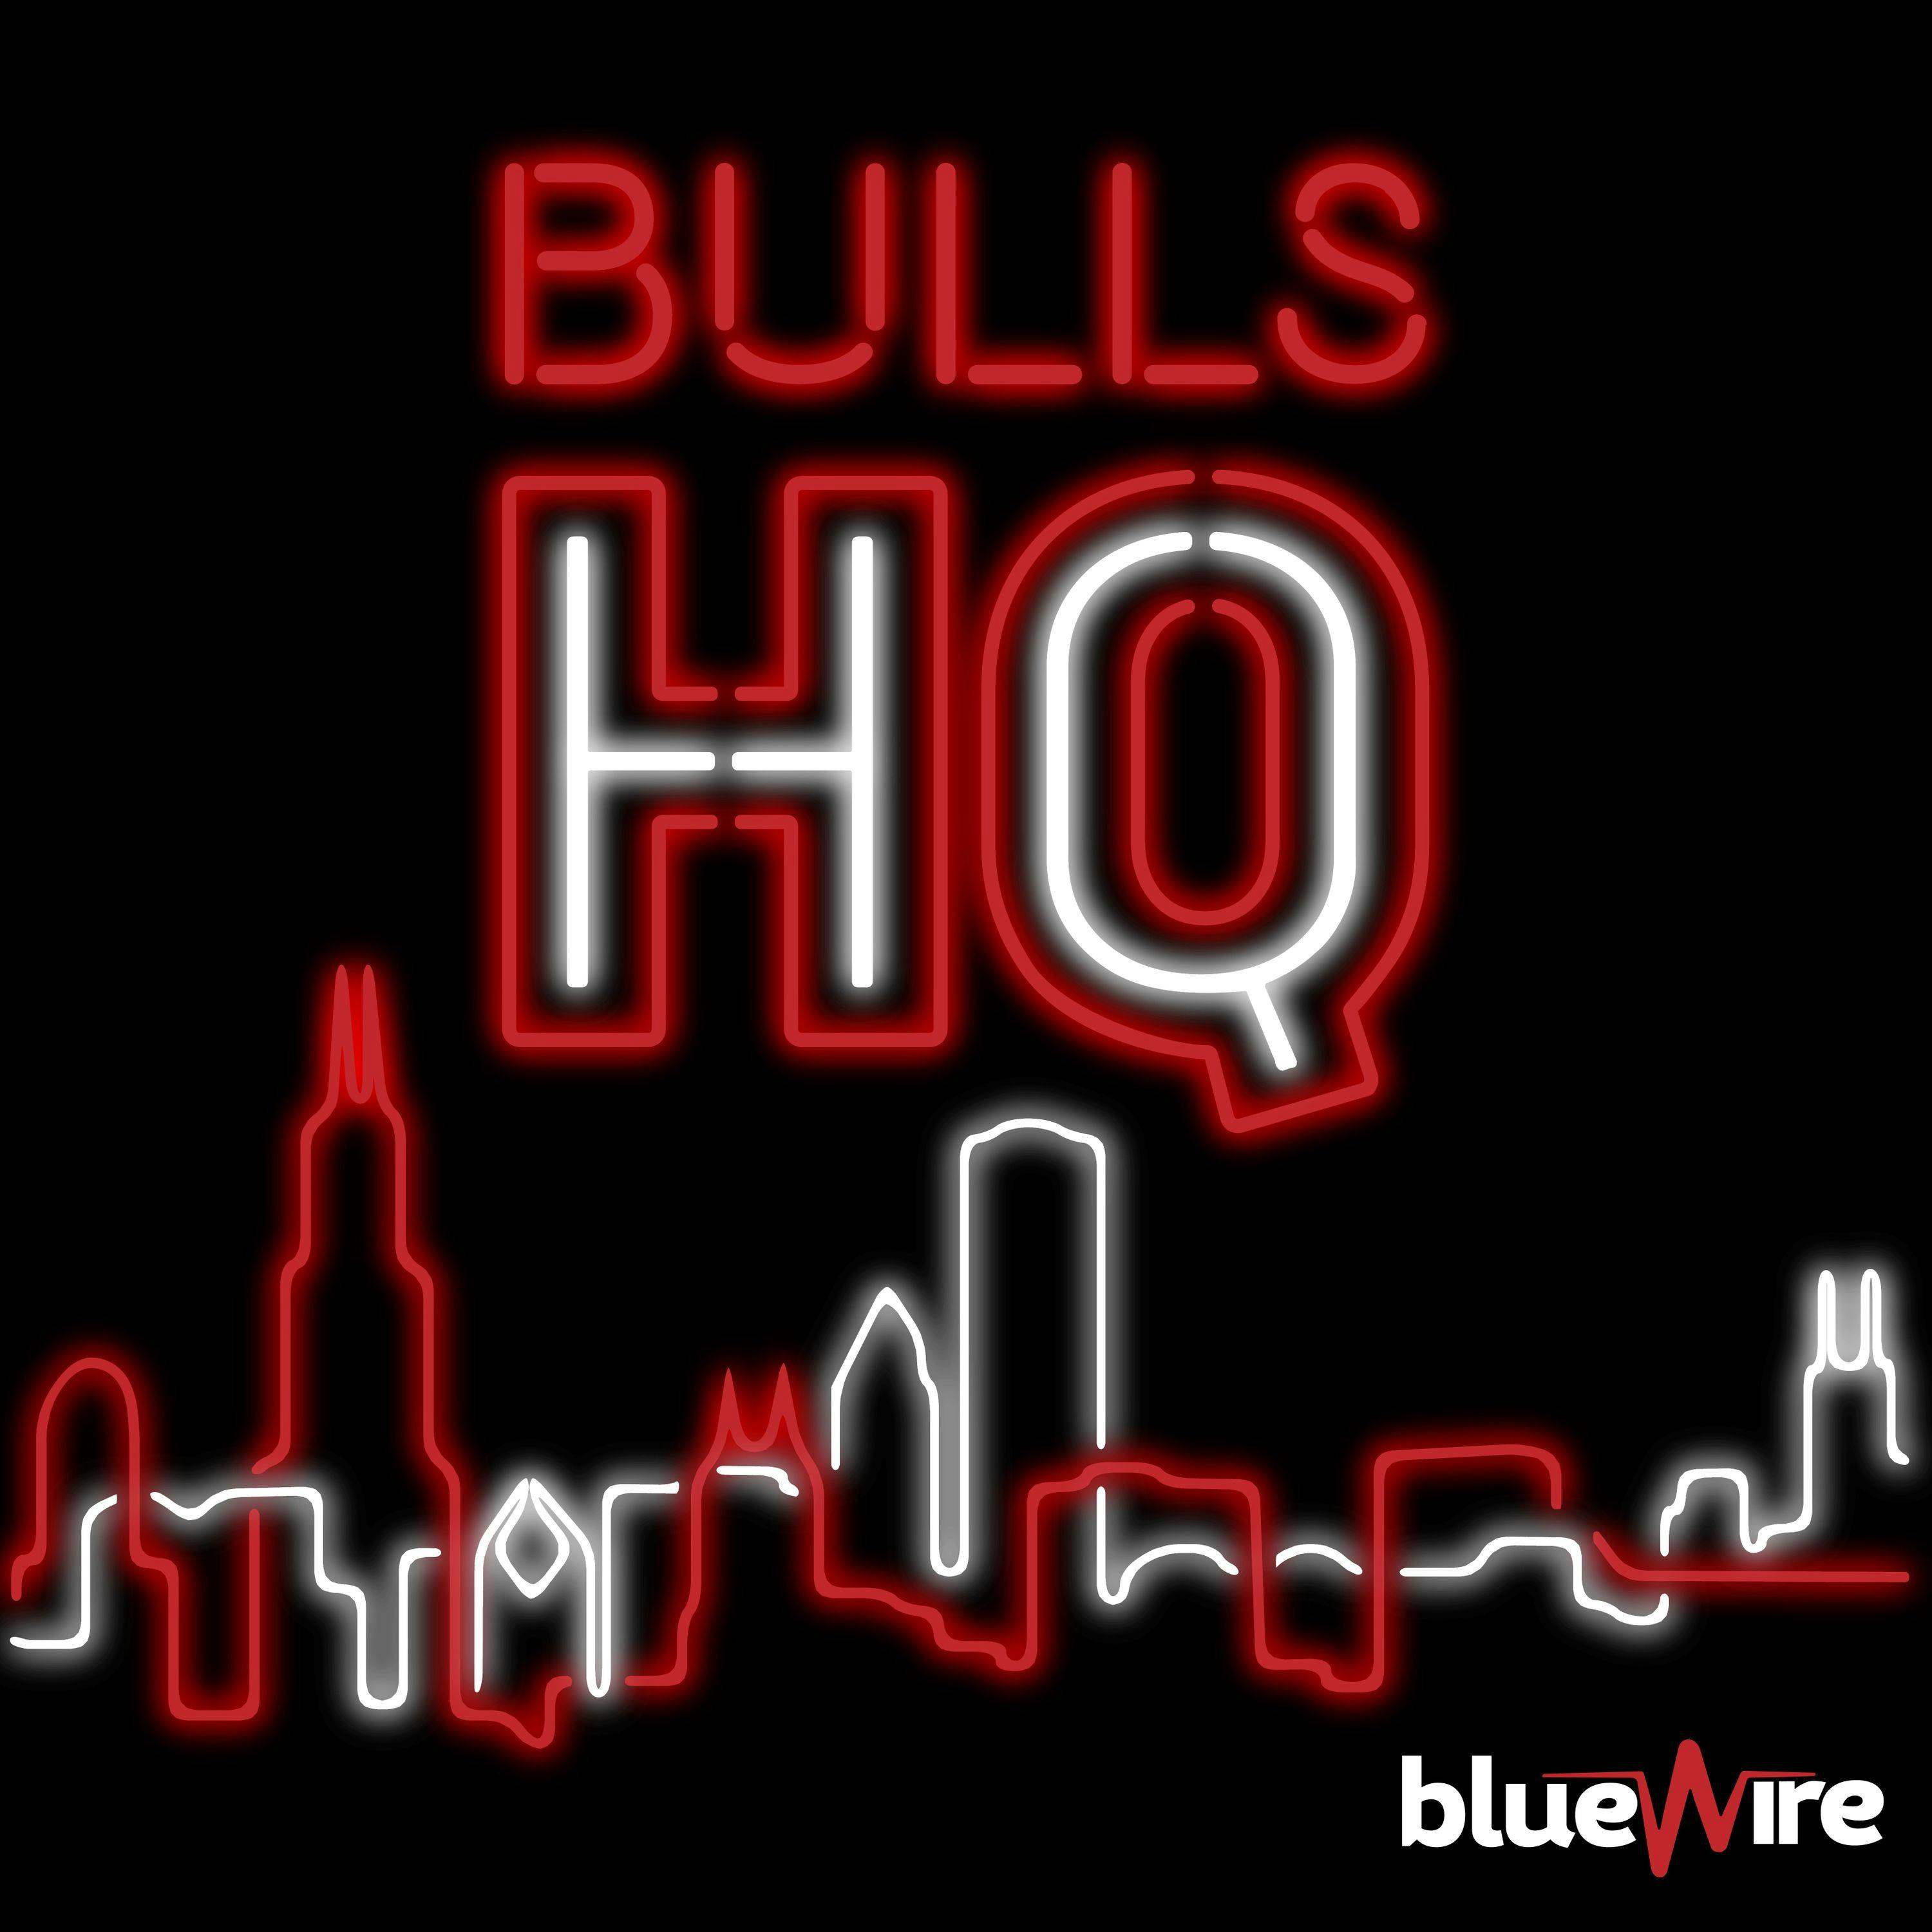 CHGO Chicago Bulls Podcast podcast